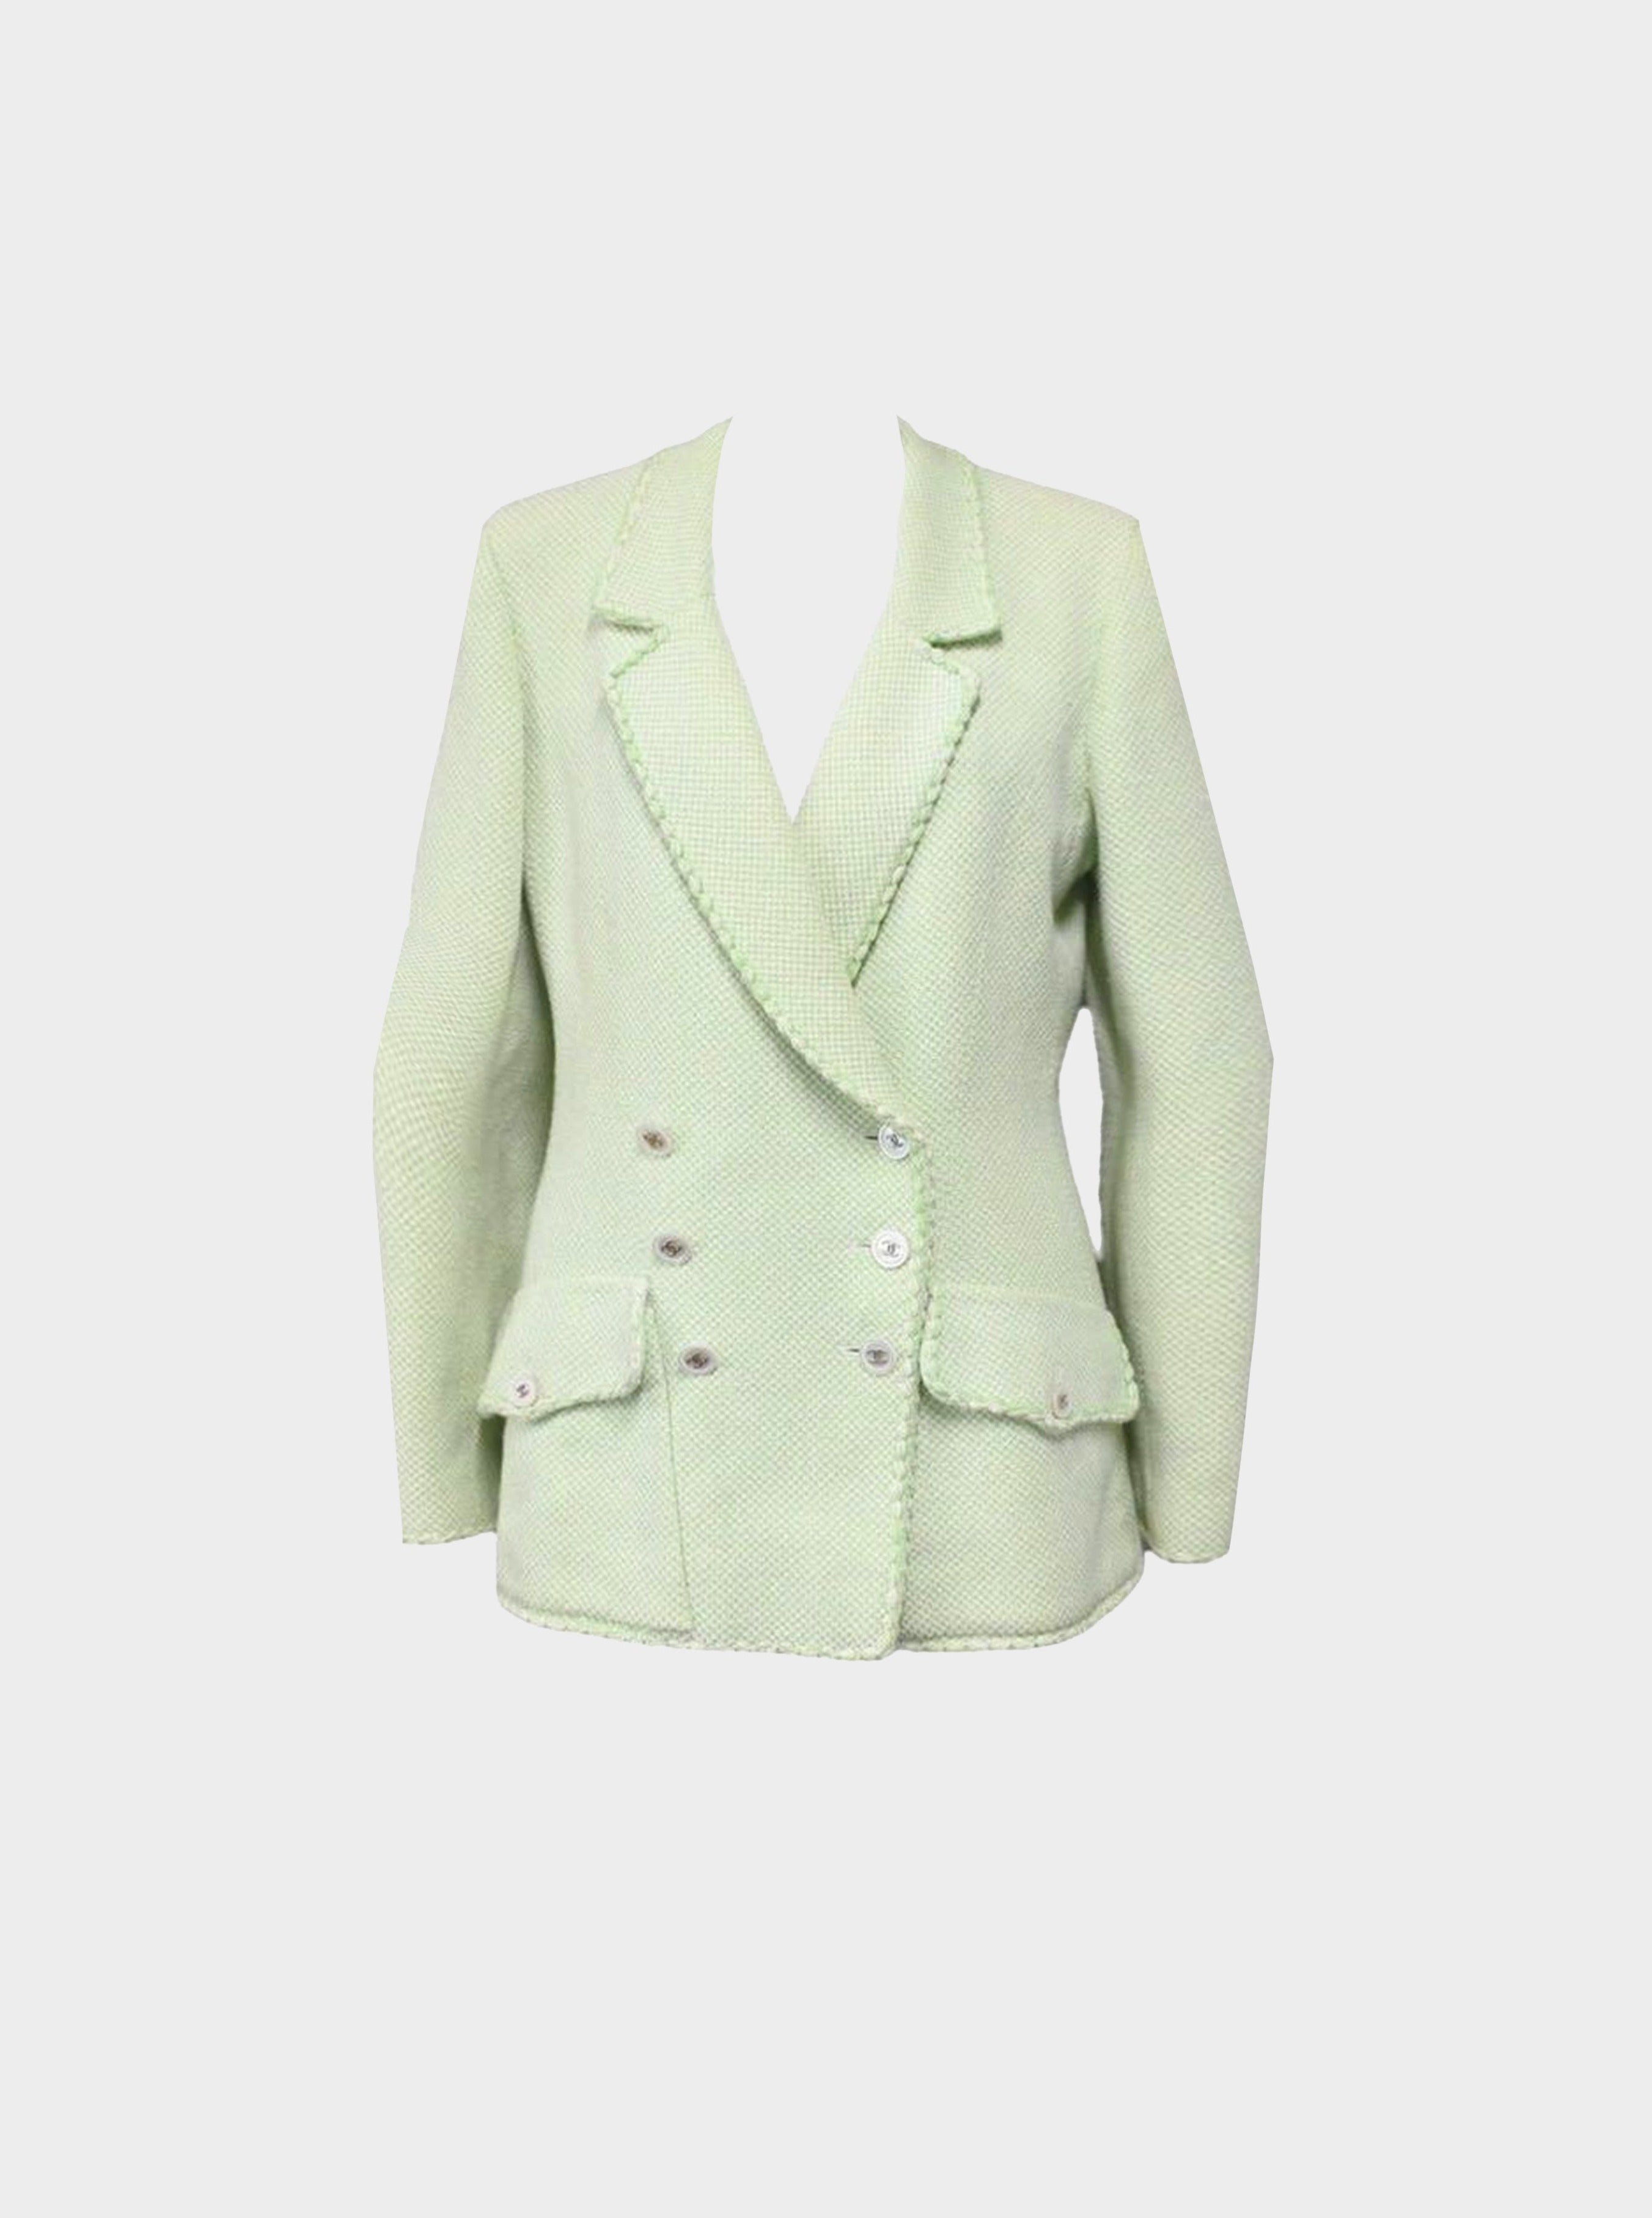 Chanel Spring 1997 Mint Green Tweed Blazer